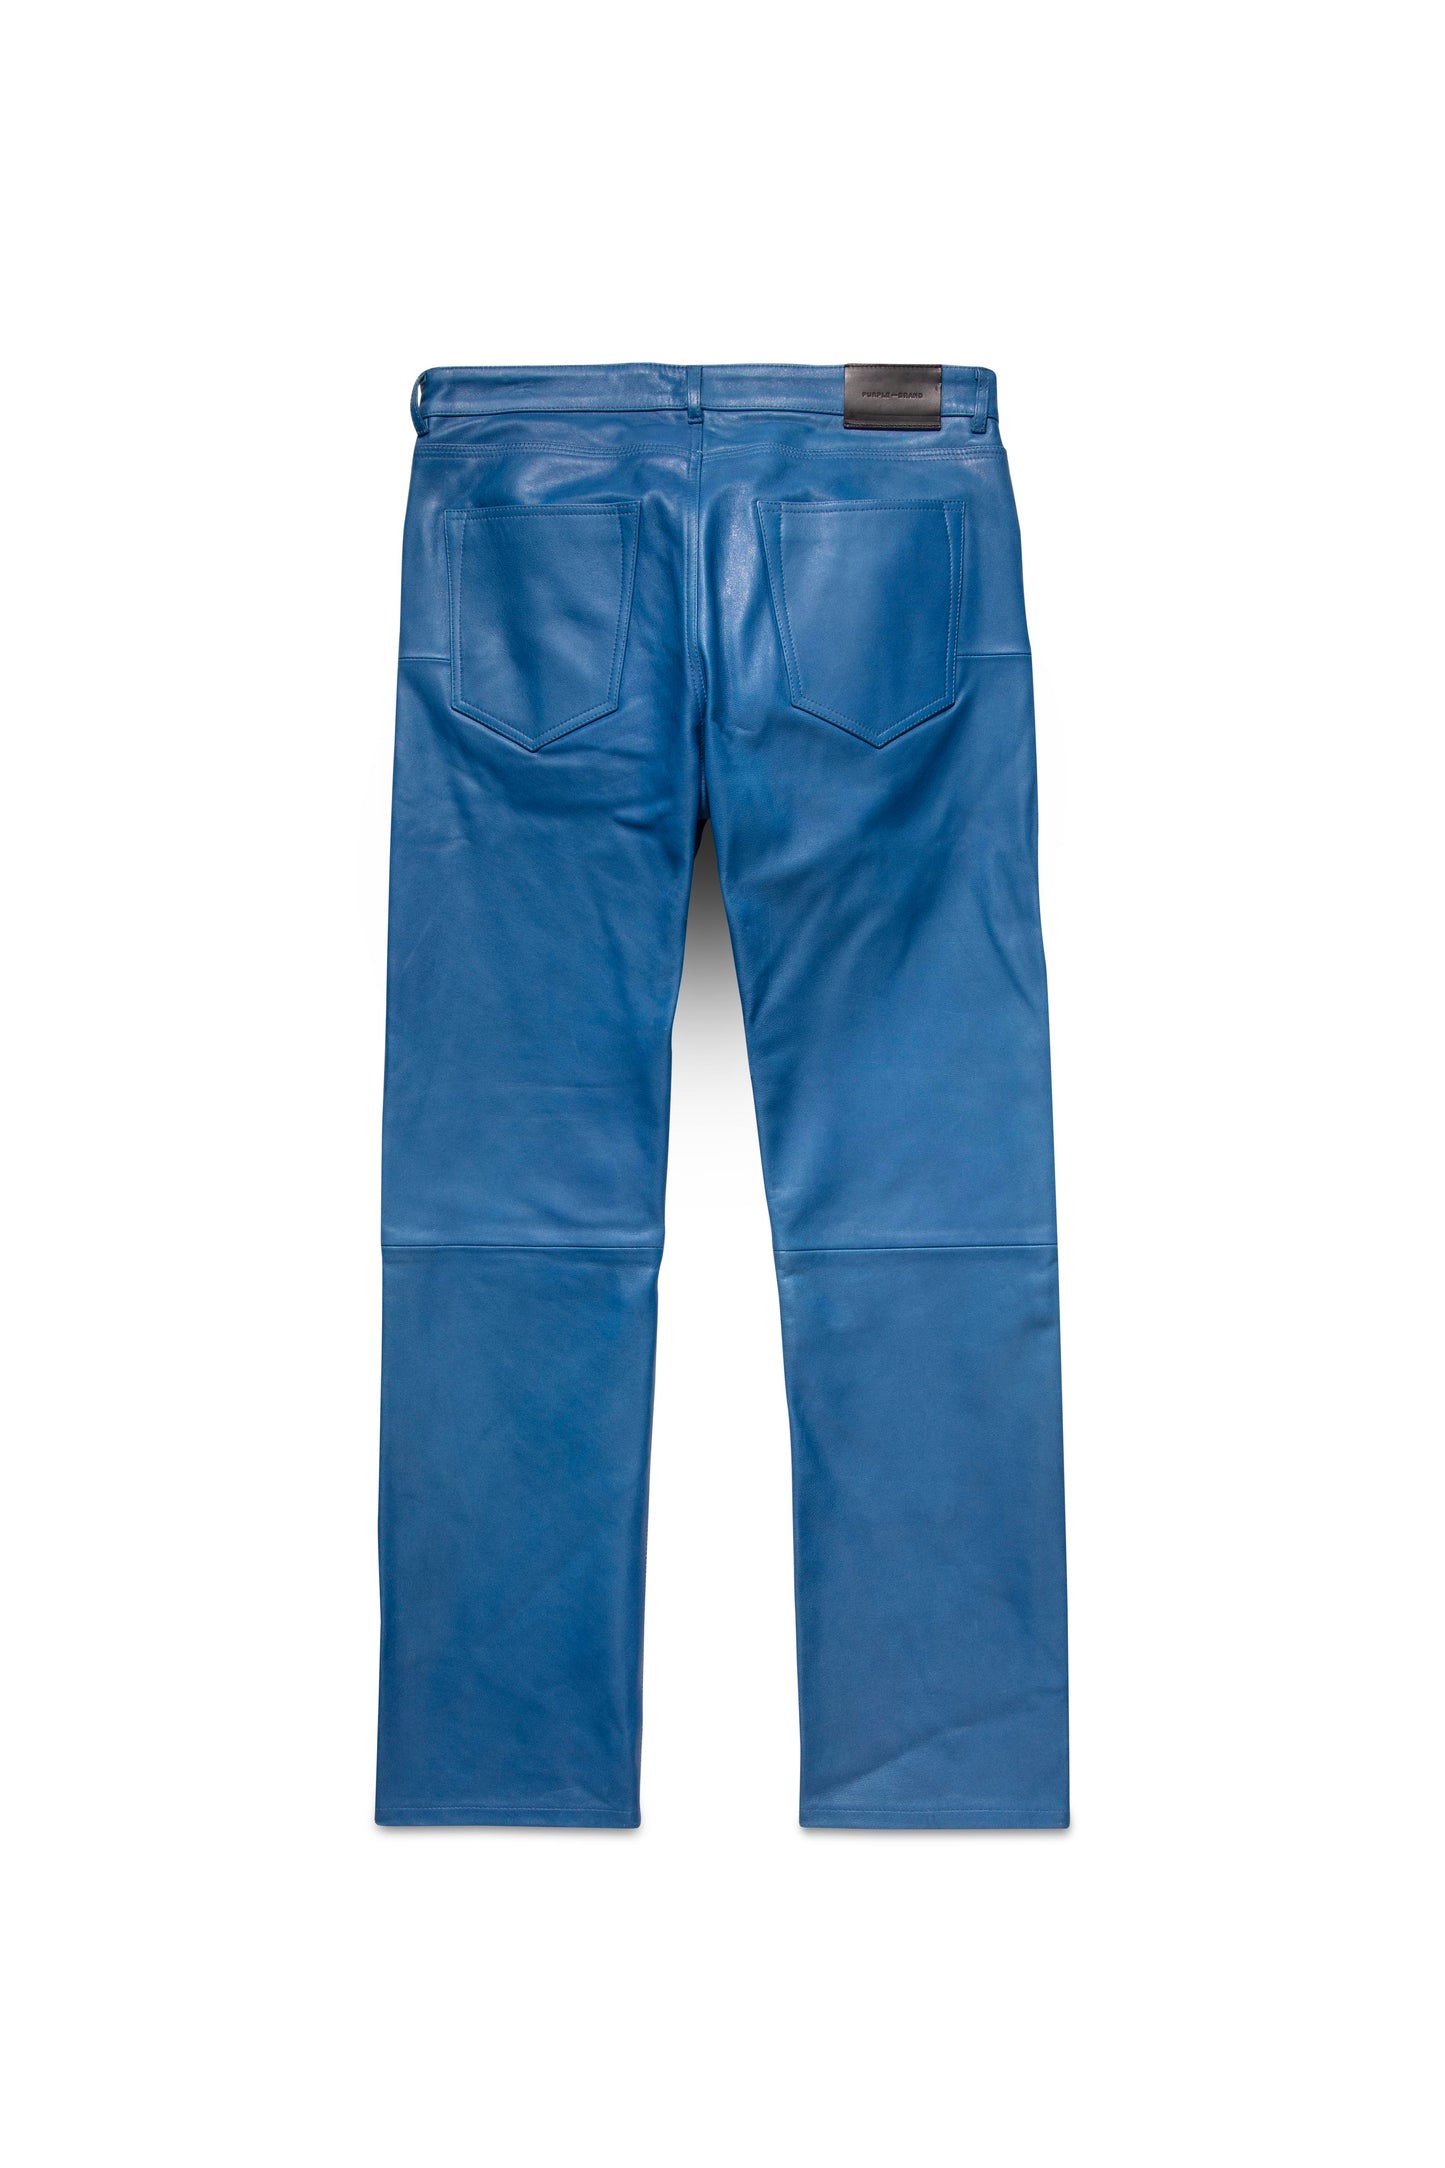 P011 MID RISE STRAIGHT LEG PANT - Leather Galaxy Blue